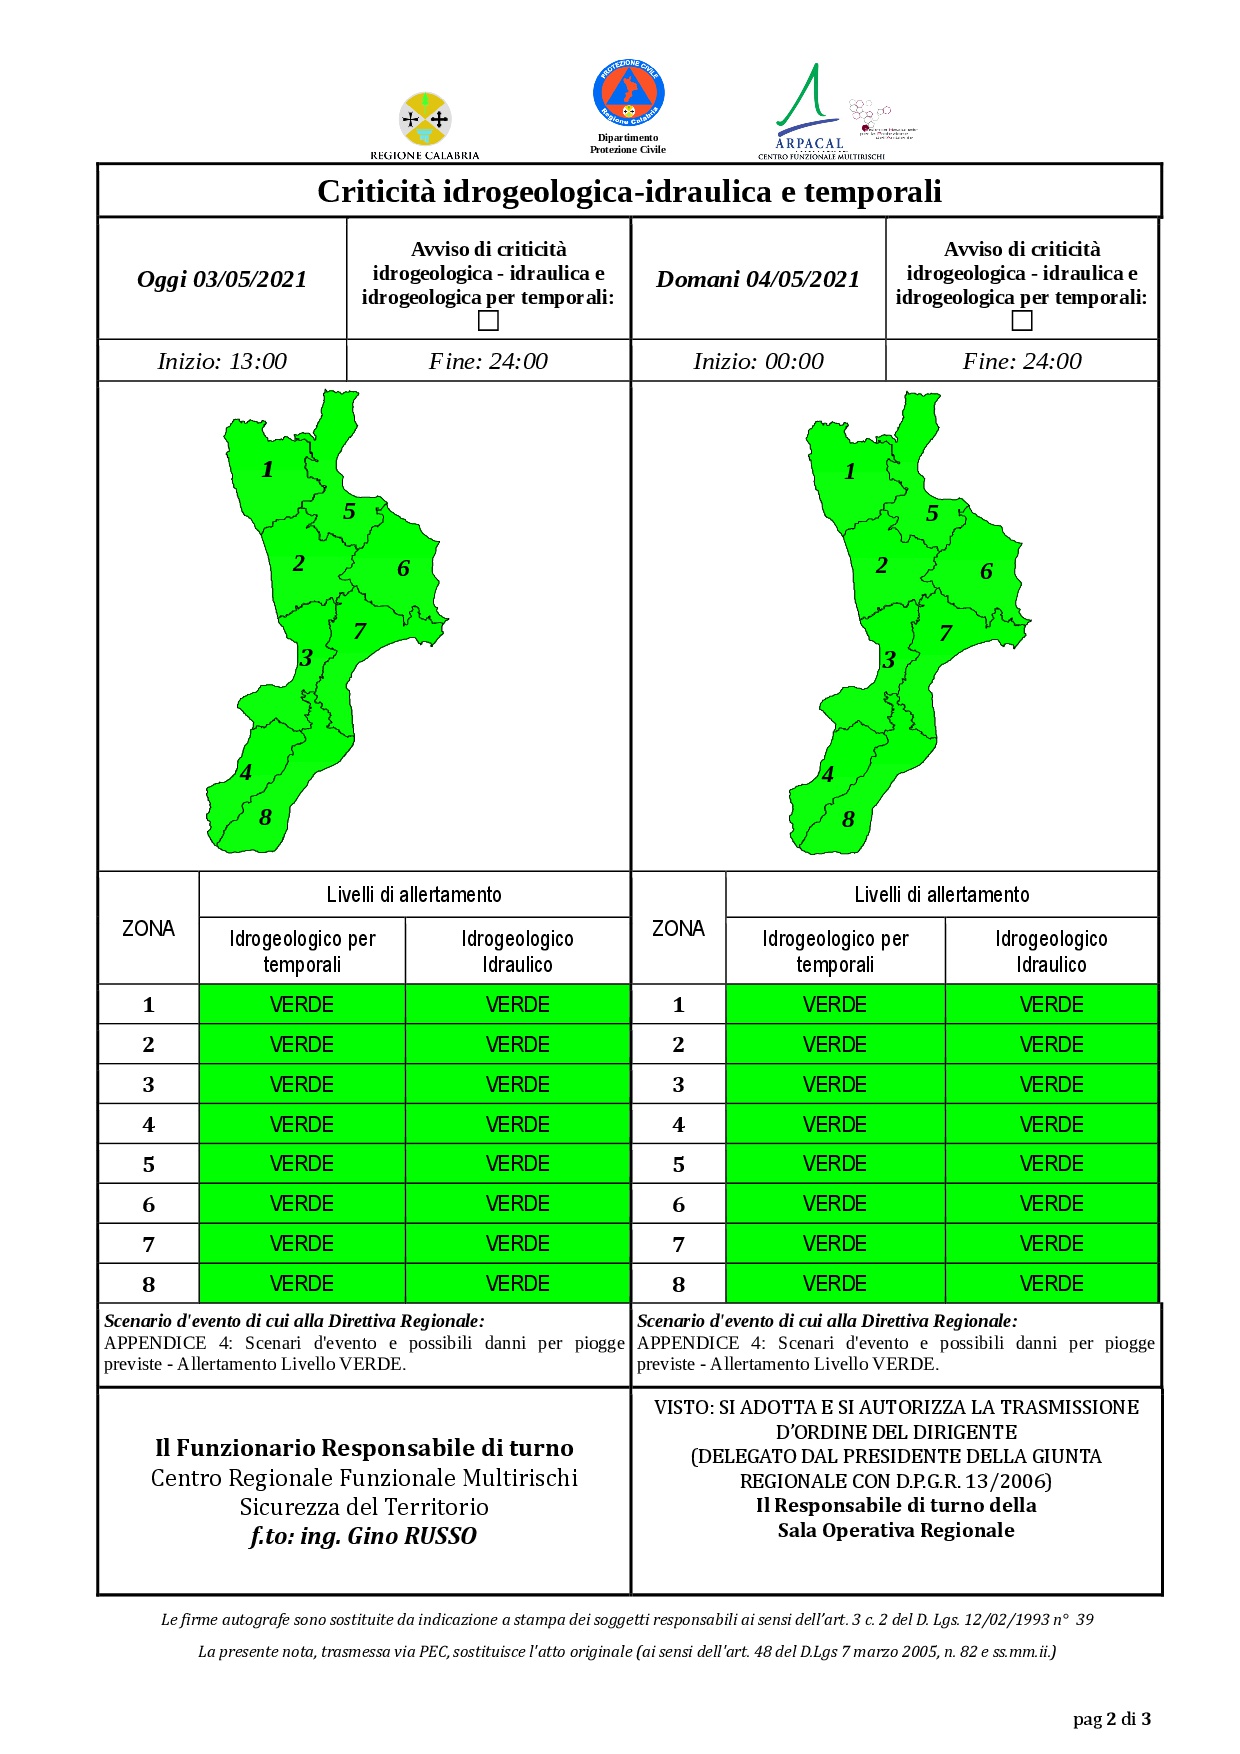 Criticità idrogeologica-idraulica e temporali in Calabria 03-05-2021